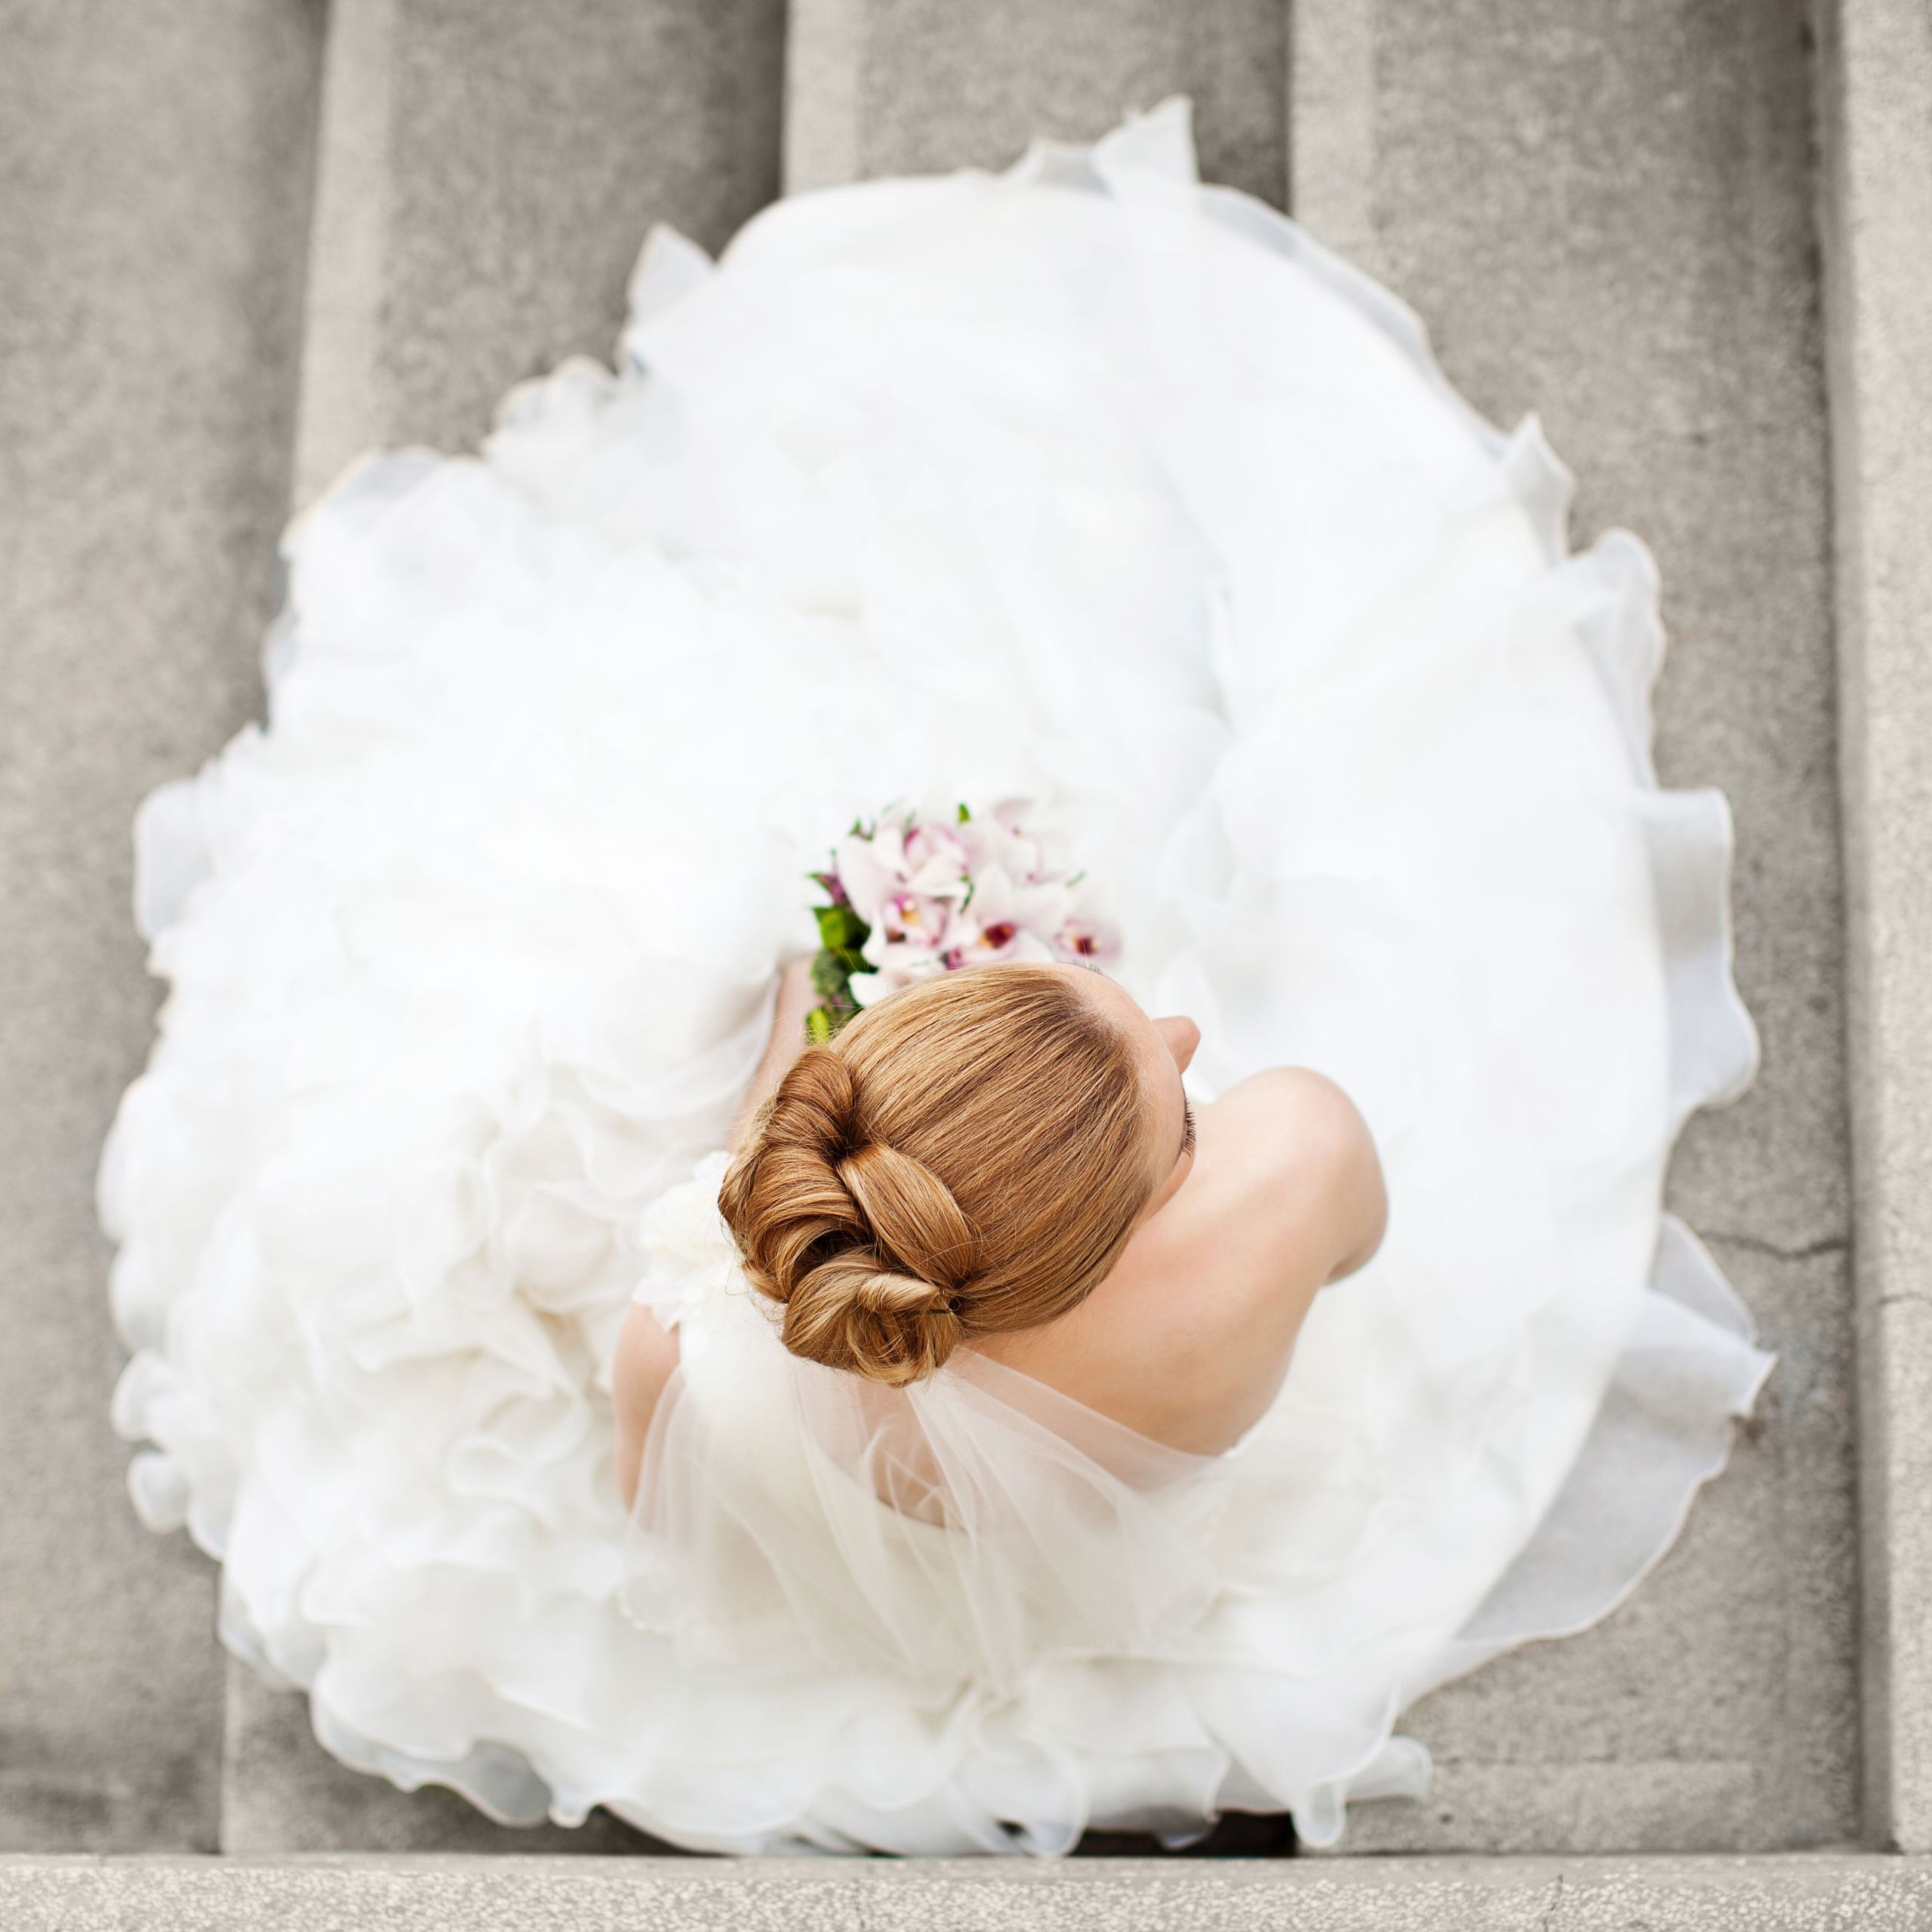 SHR_Weddings-Bride_iStock-125141125.jpg